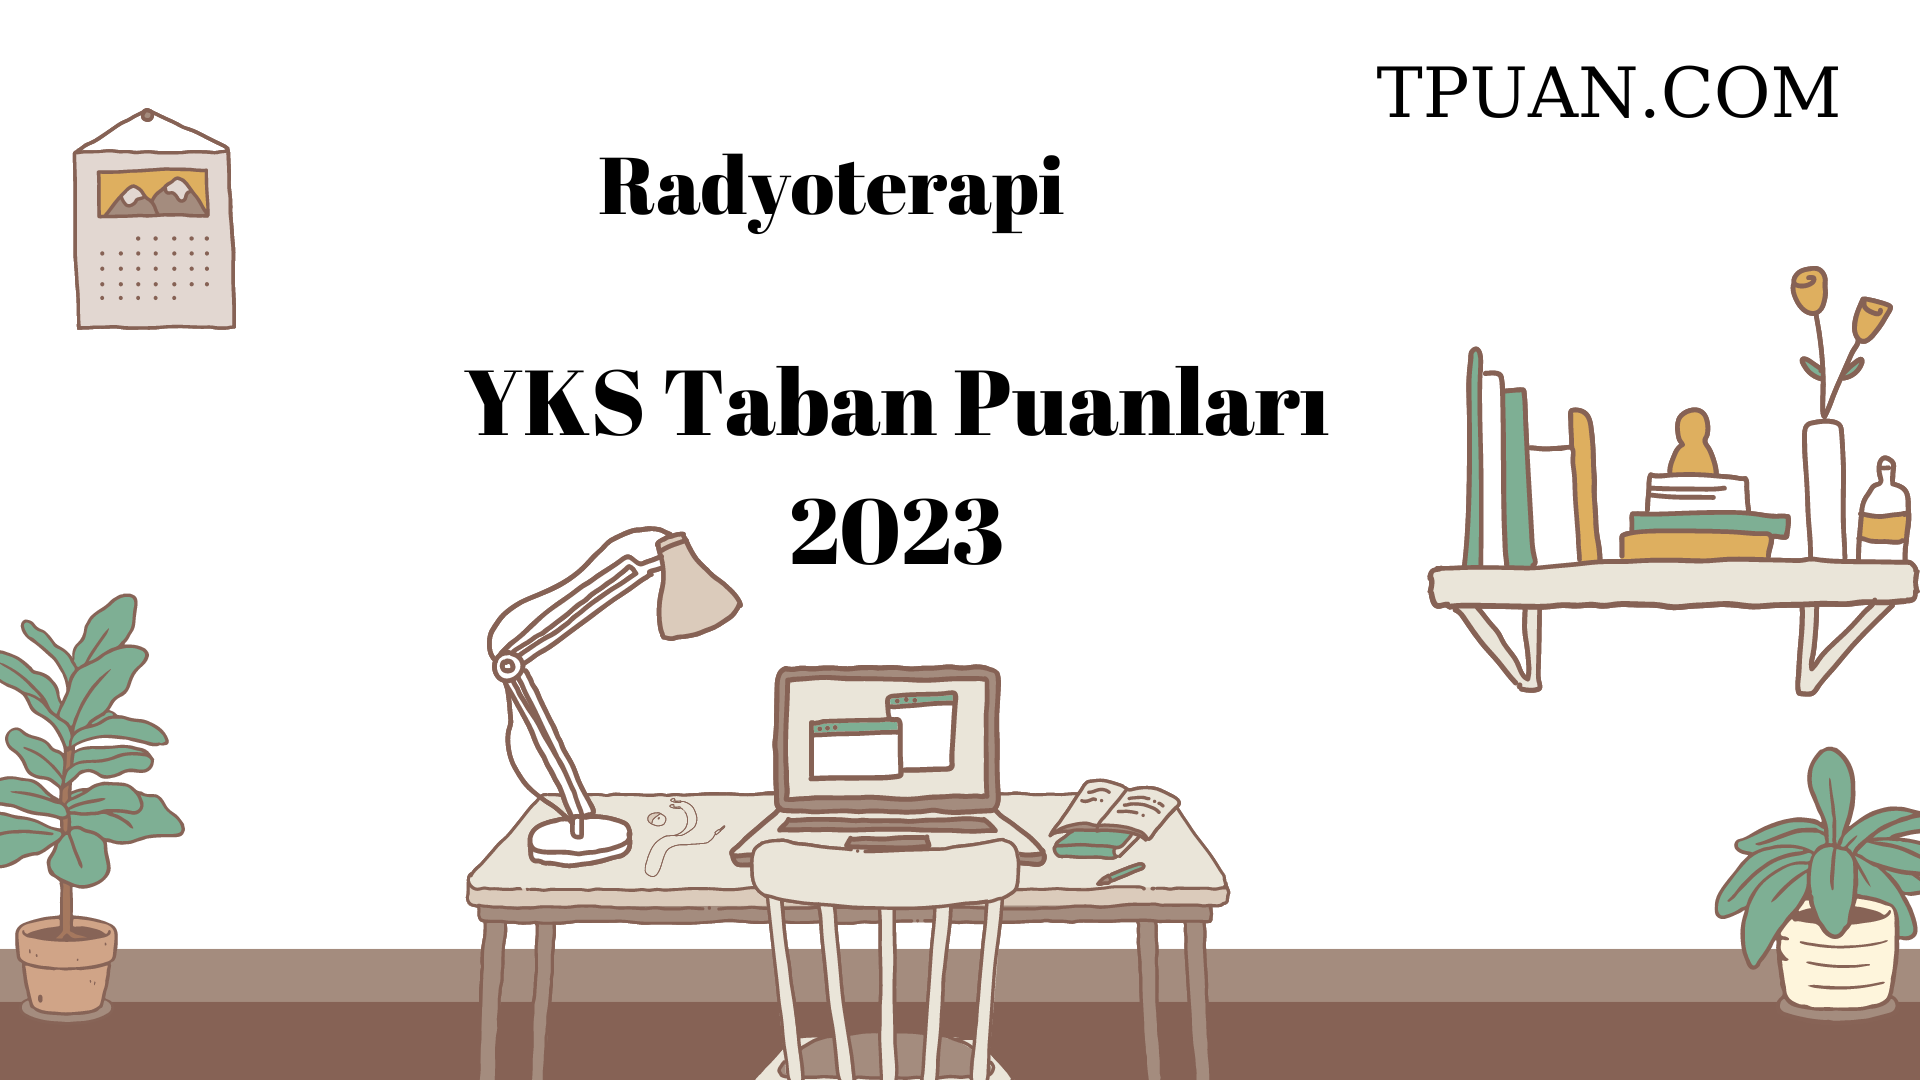  Radyoterapi YKS Taban Puanları 2023